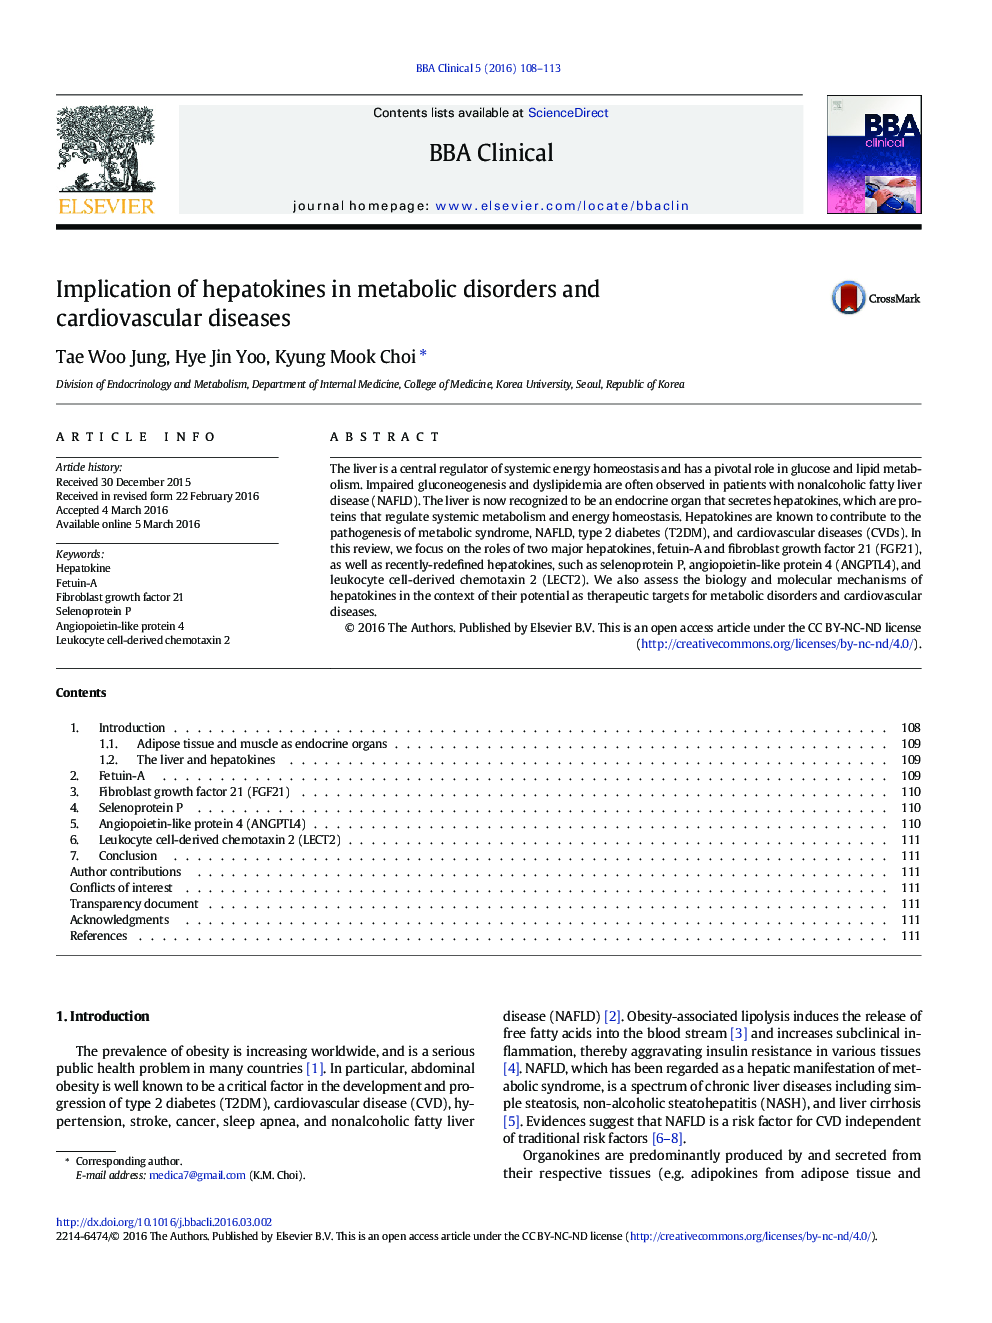 Implication of hepatokines in metabolic disorders and cardiovascular diseases